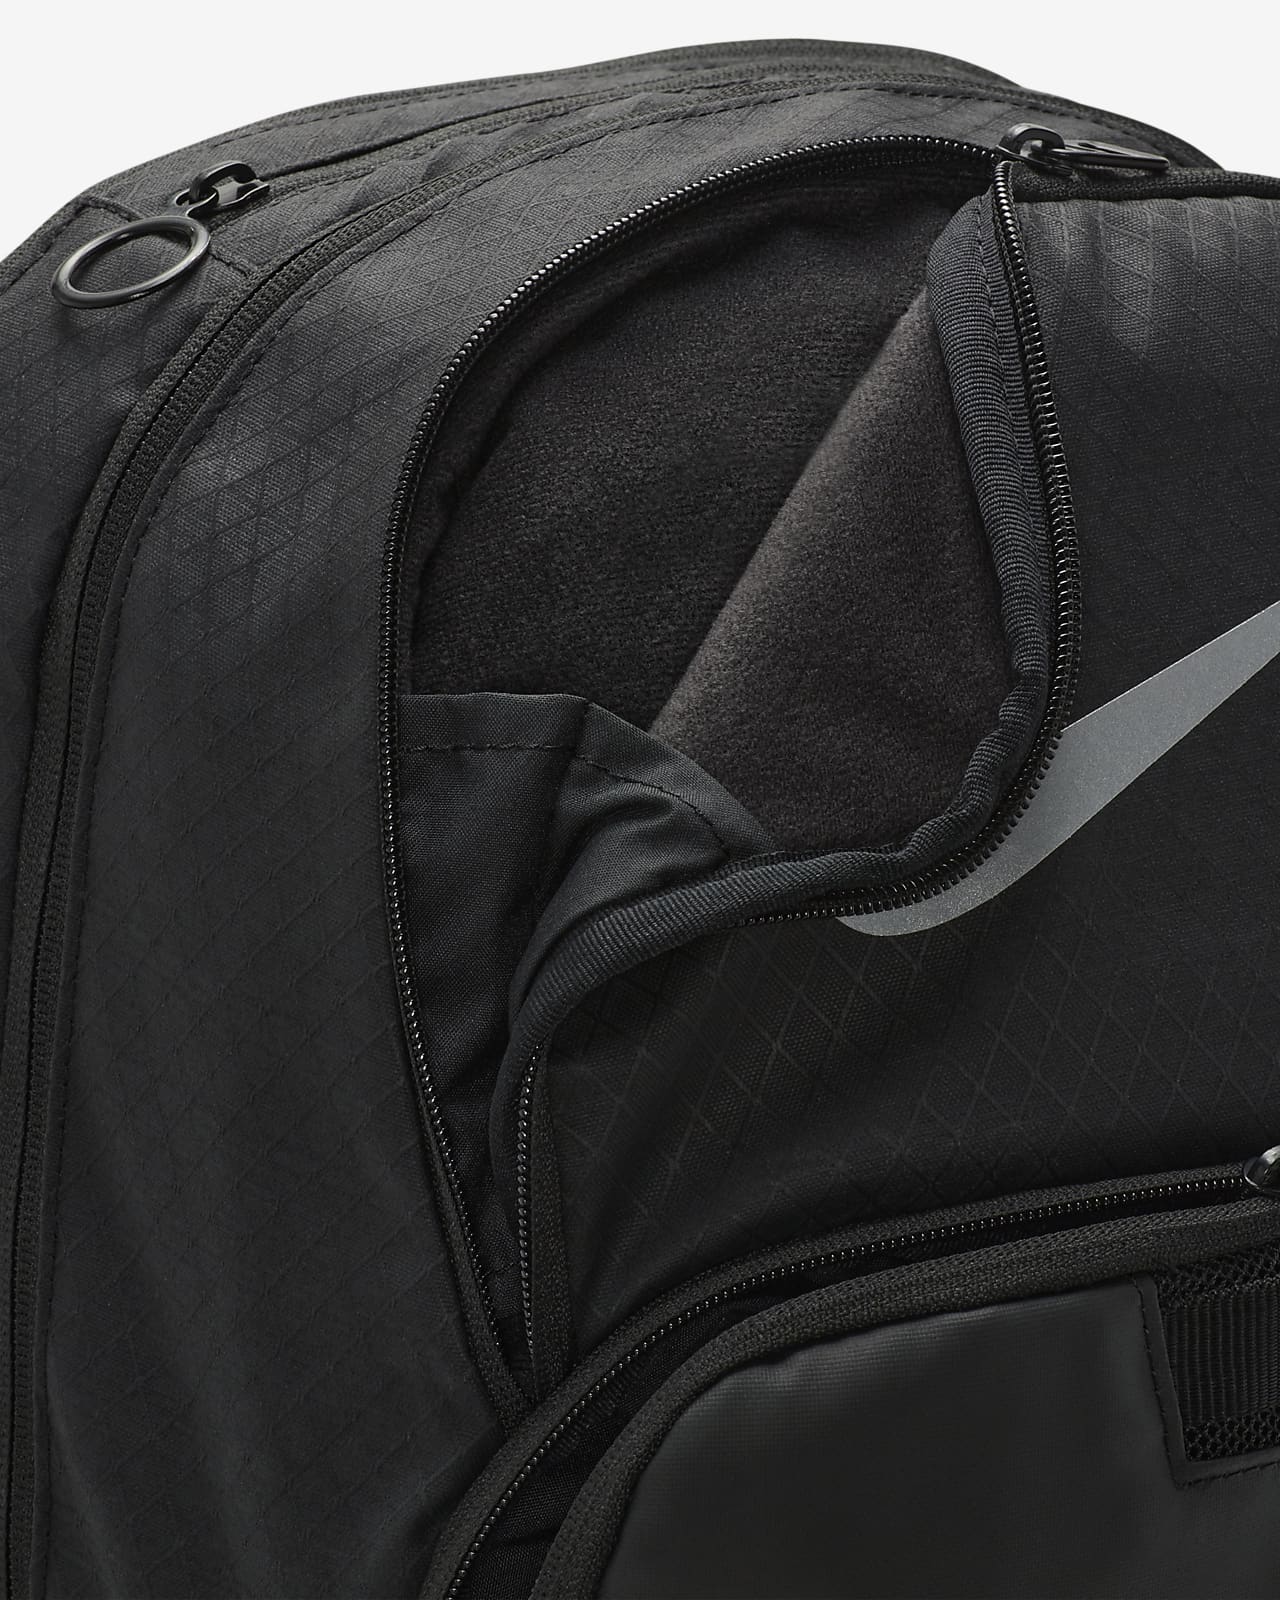 Tennis Backpack Nike Brasilia Winterized Graphic Training Backpack